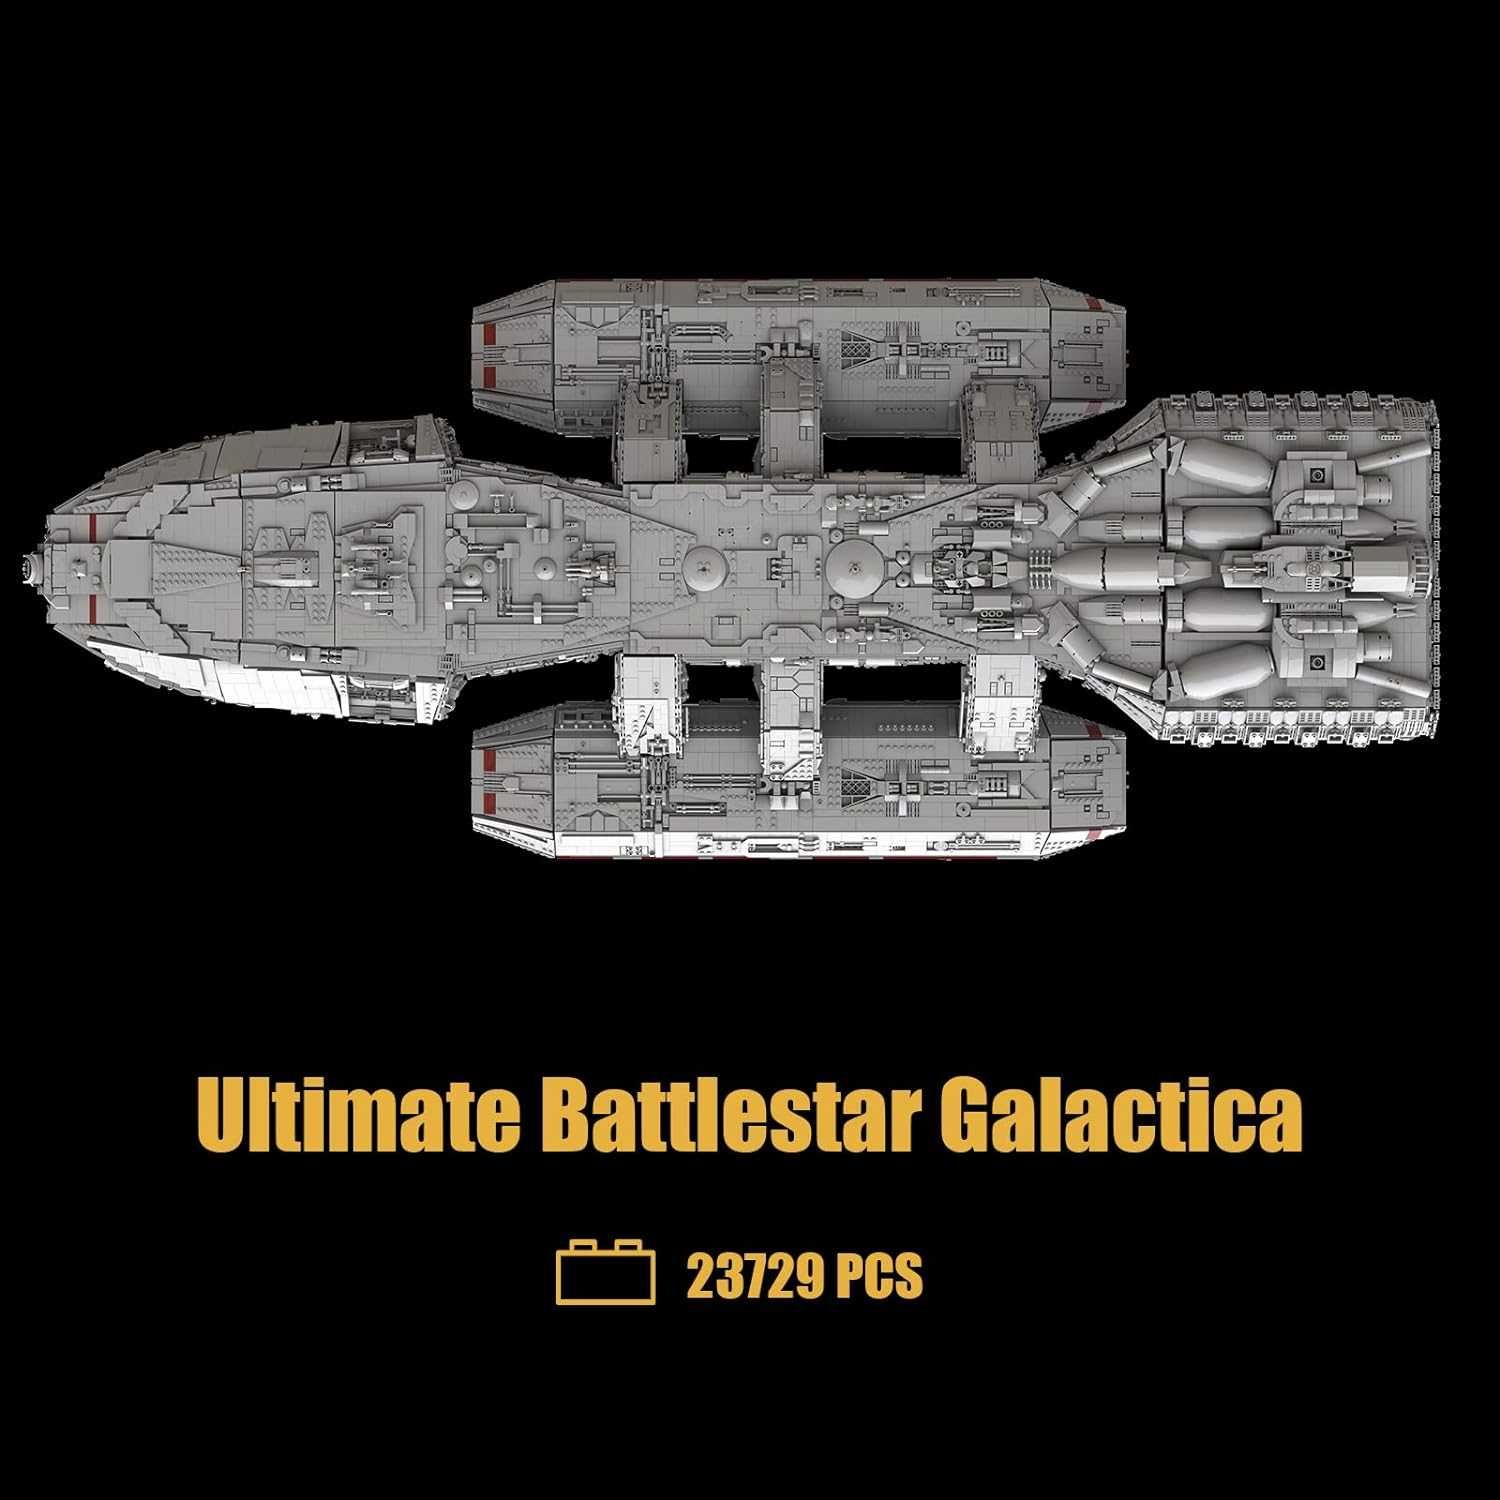 LEGO 23,729 PEÇAS Battlestar Galactica